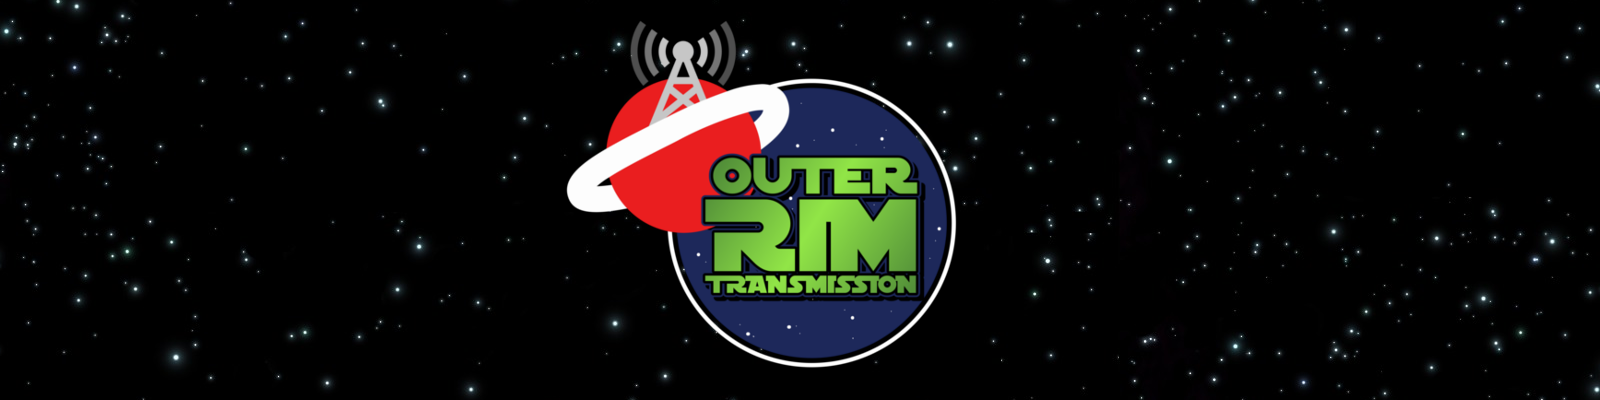 Outer Rim Transmission